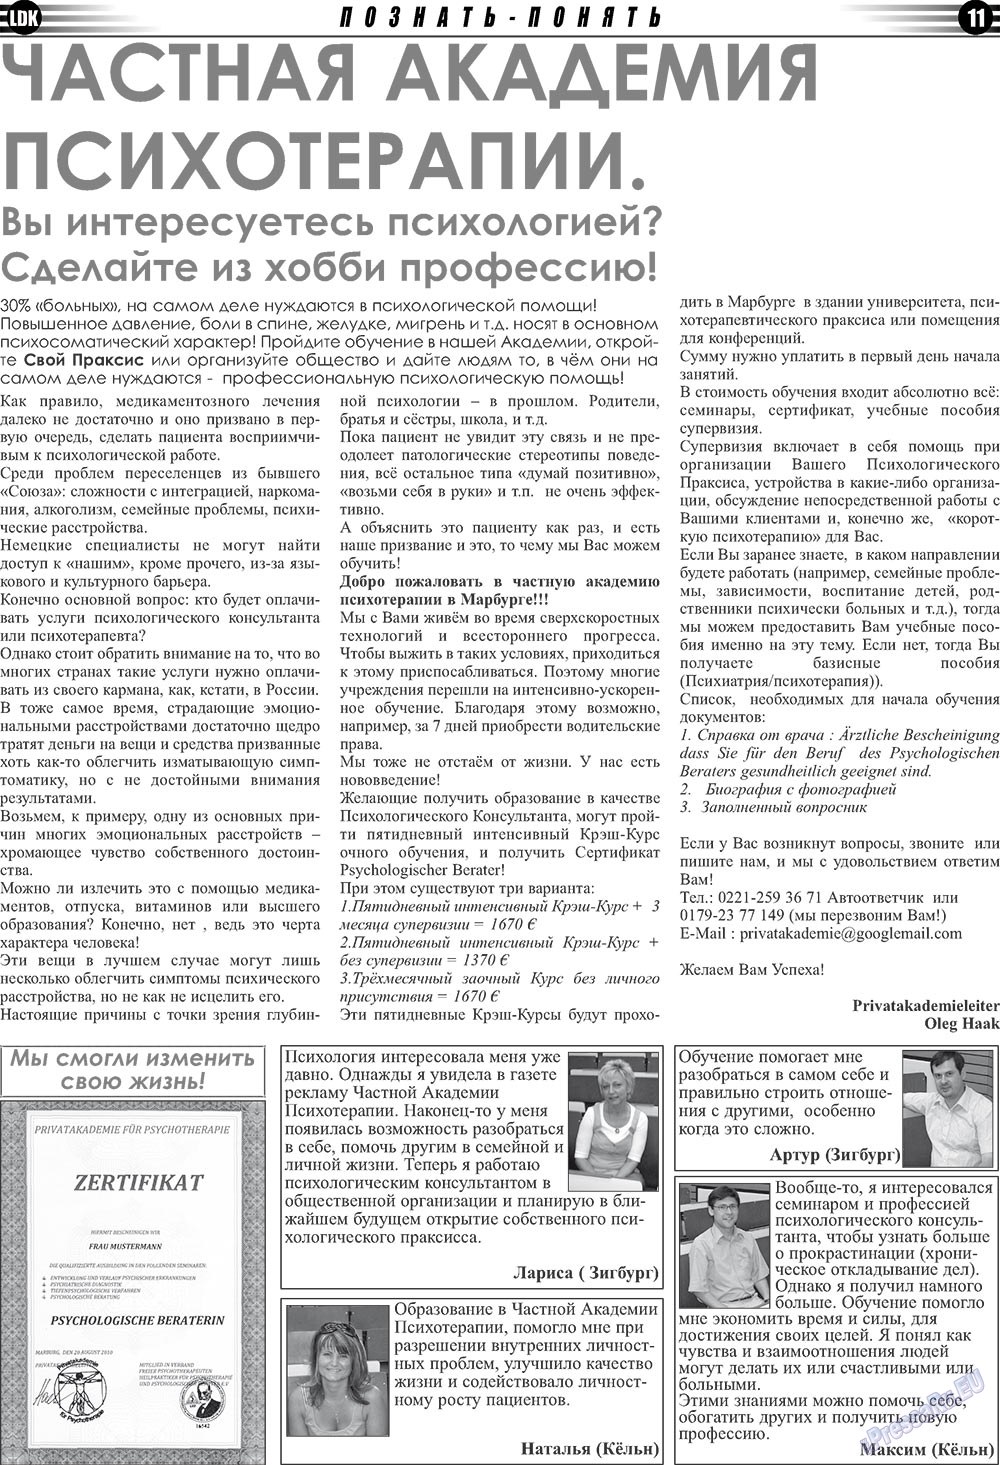 LDK по-русски, газета. 2010 №10 стр.11